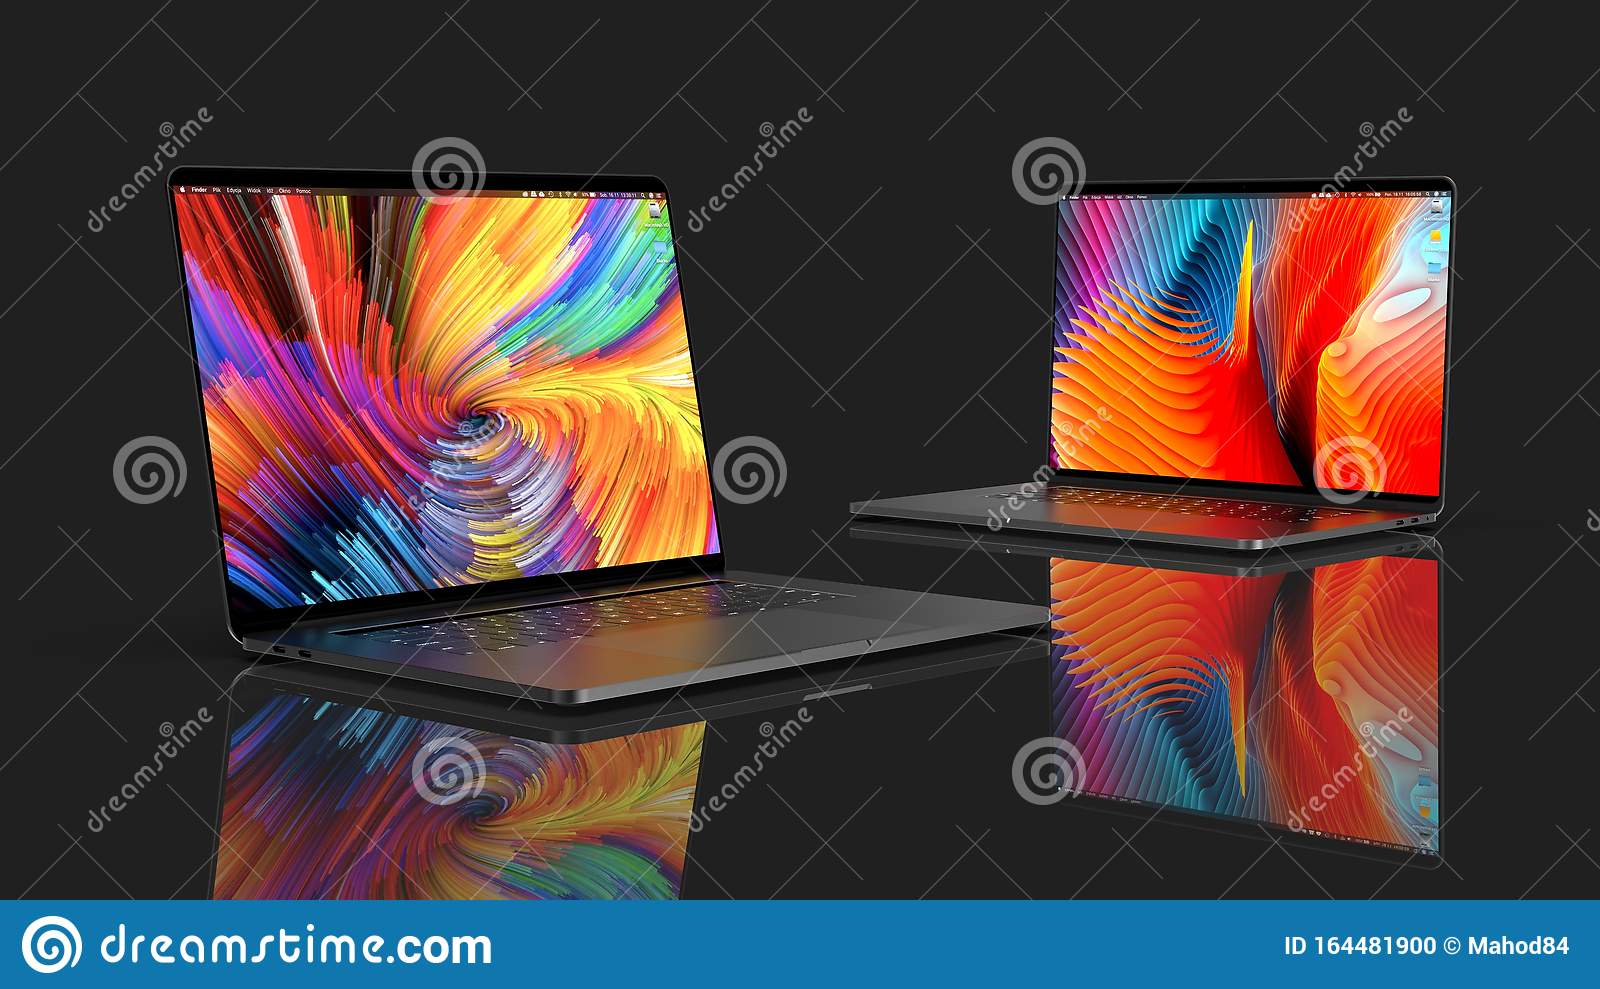 Mac Os For Hp Laptop Free Download